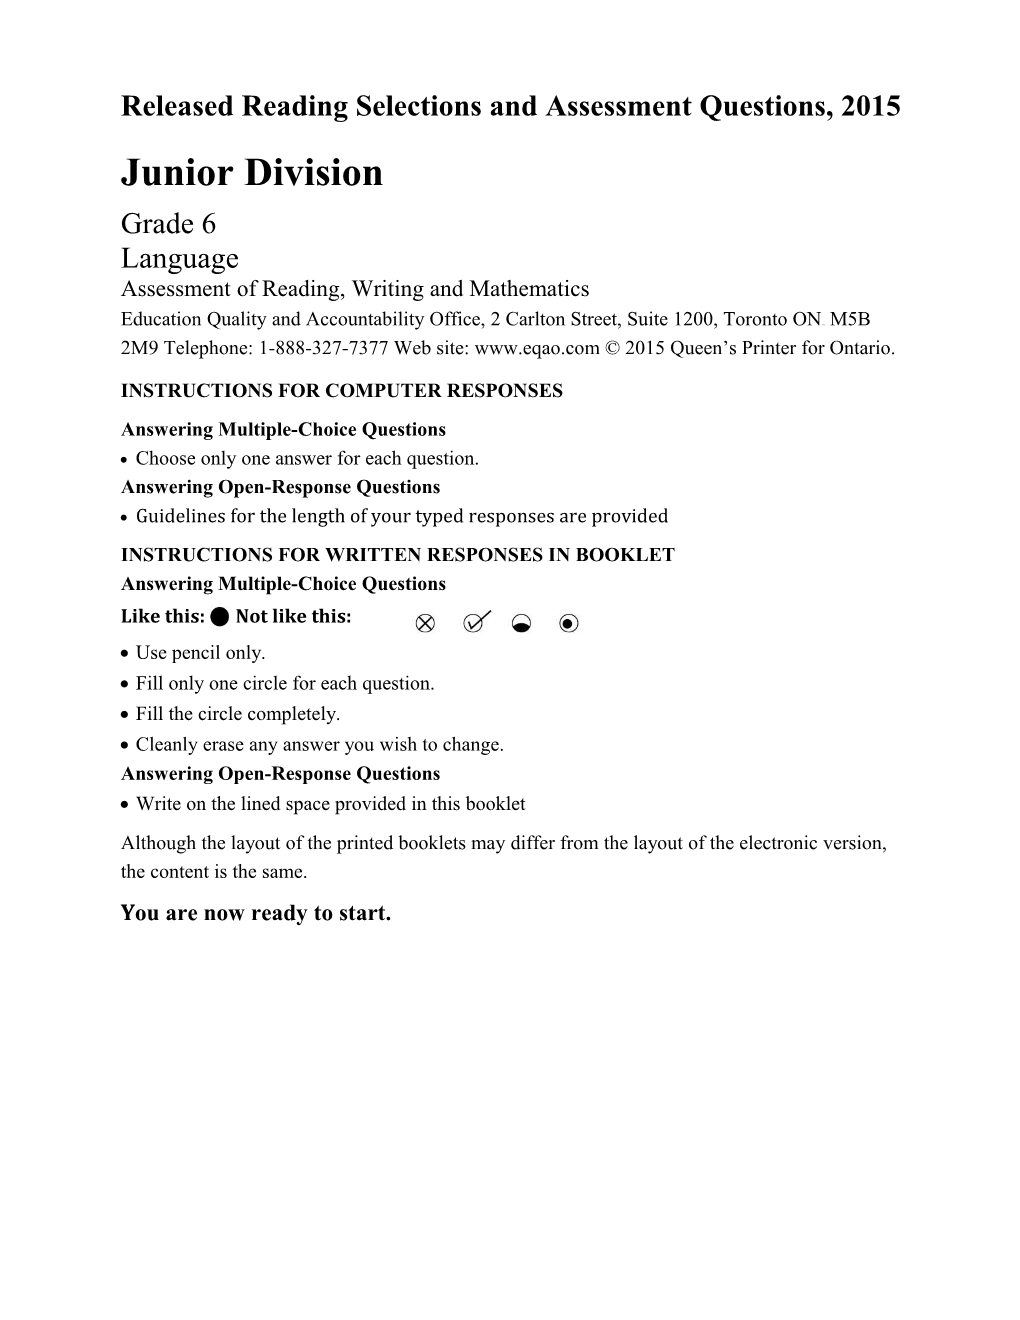 Grade 6, Junior Division, Sample Assessment Booklet: Word Optimized for Premier, 2015